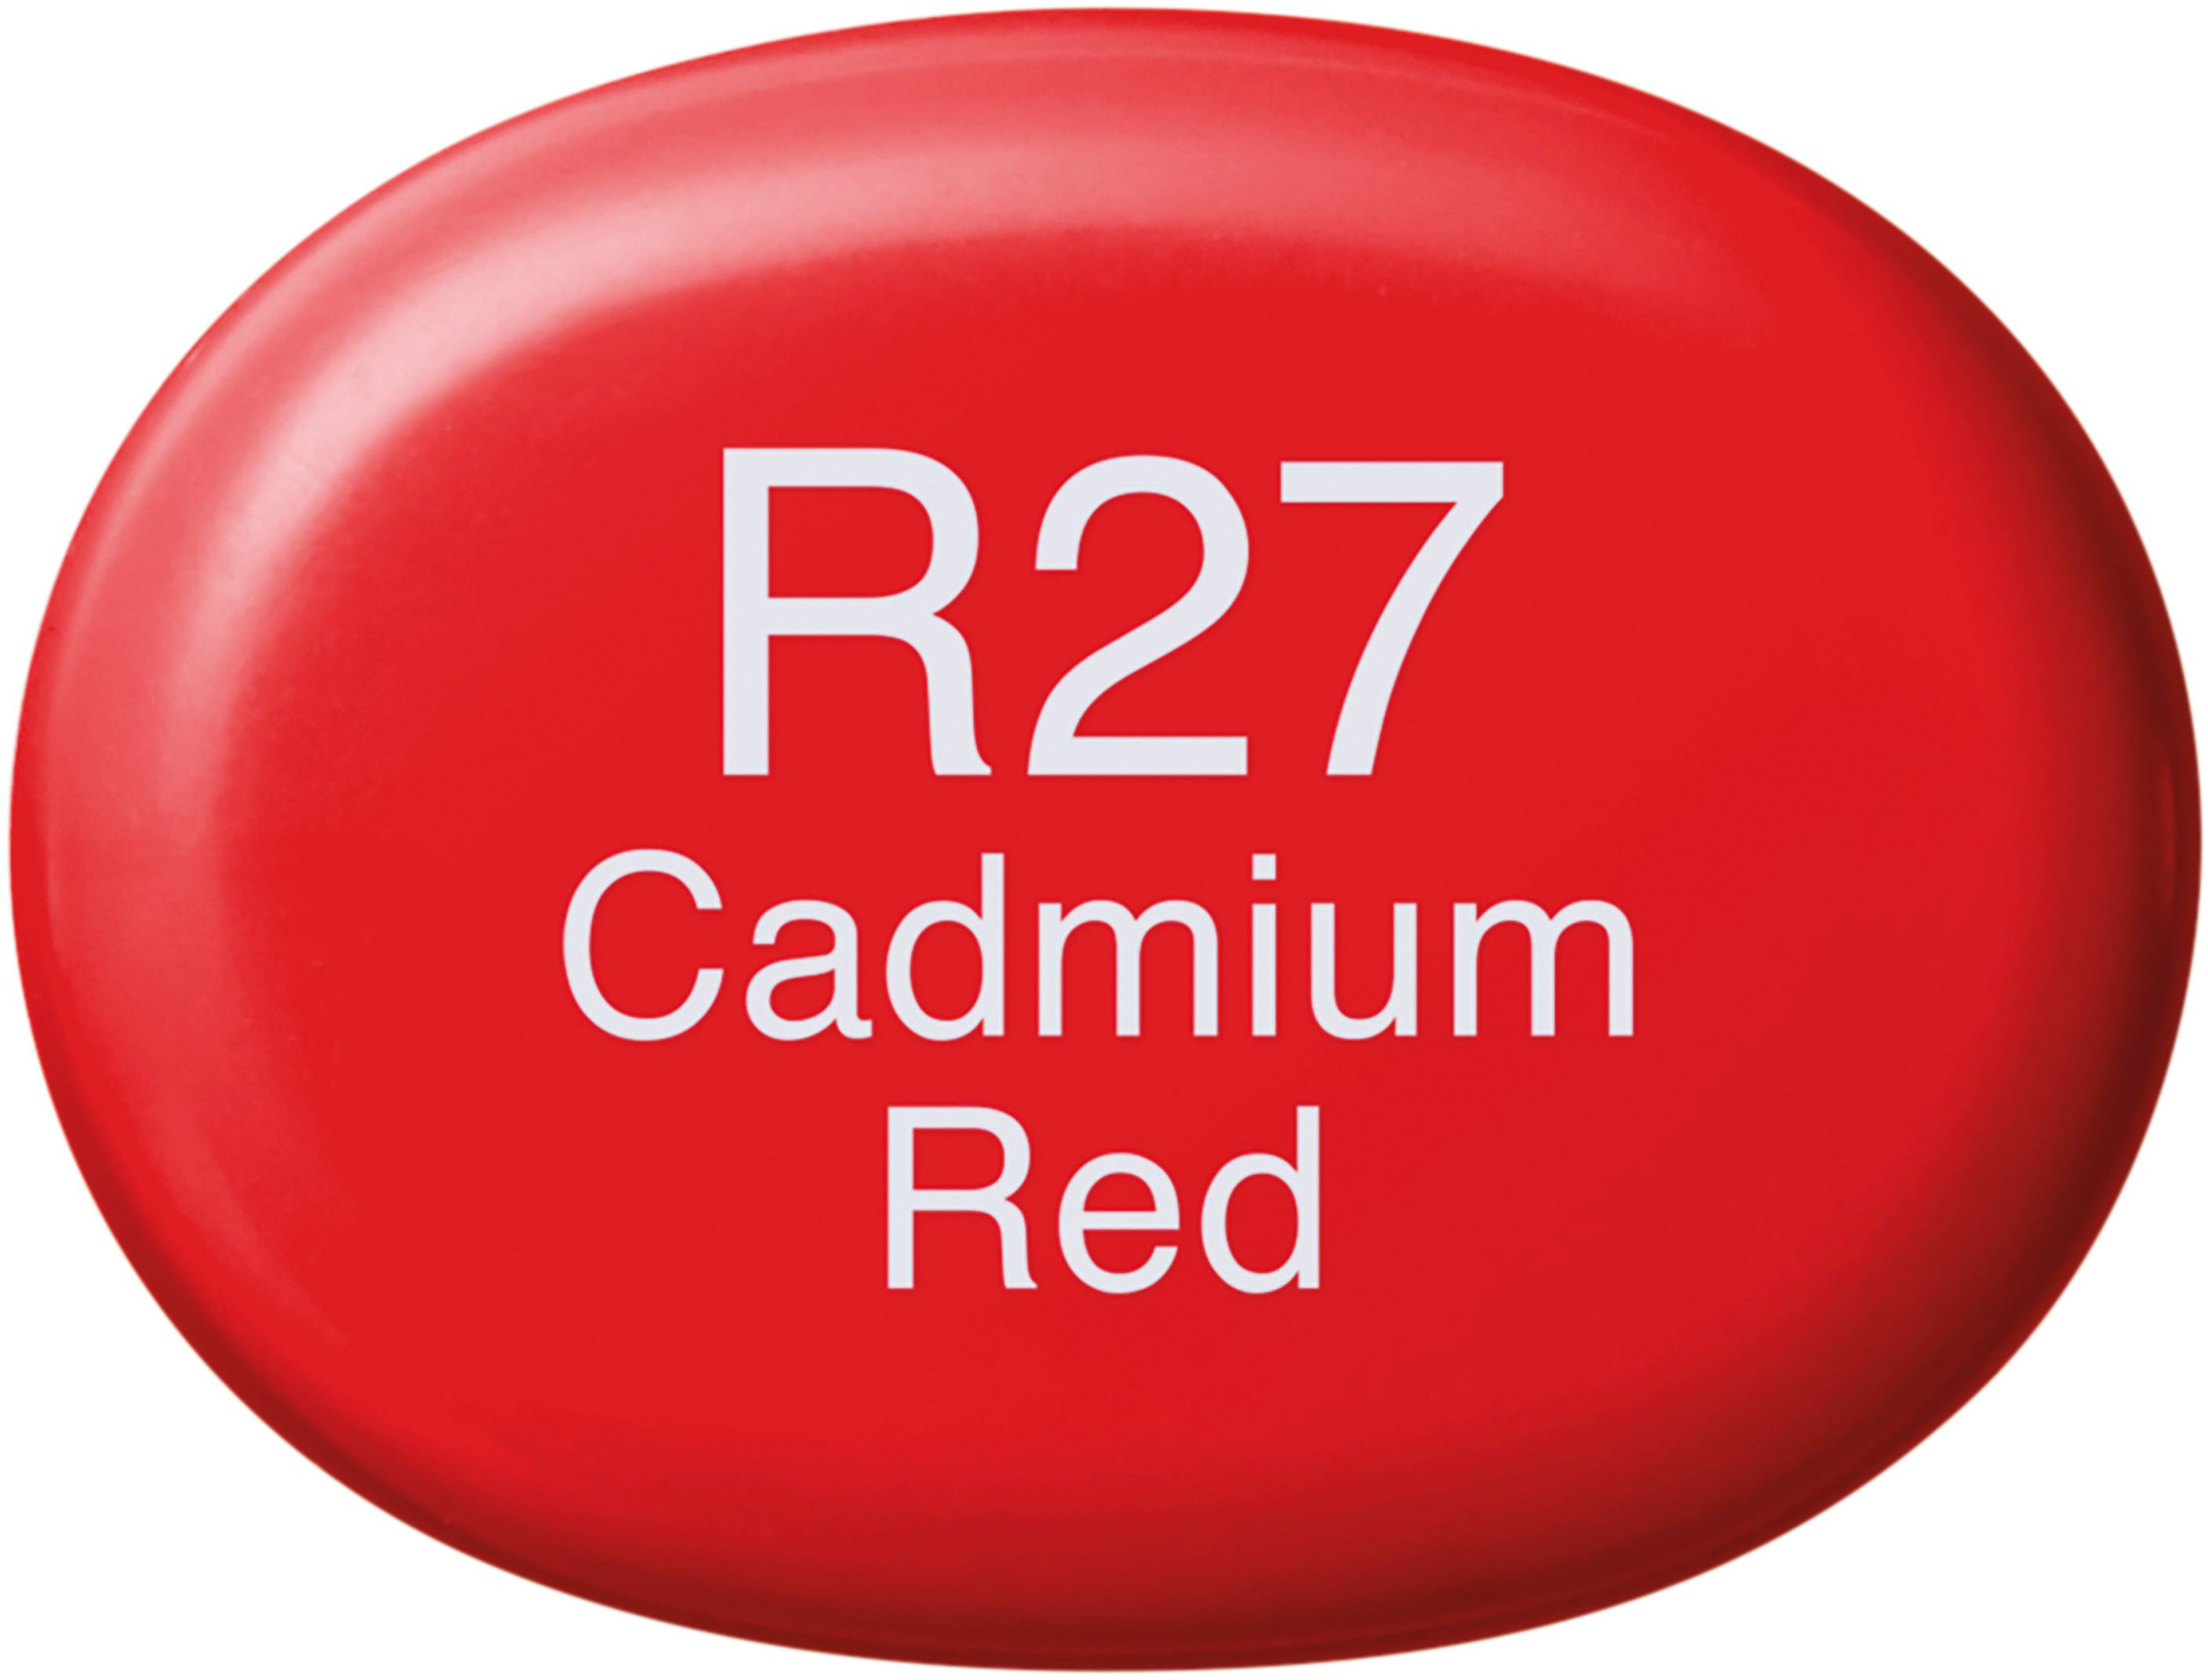 COPIC Marker Sketch 2107531 R27 - Cadmium Red